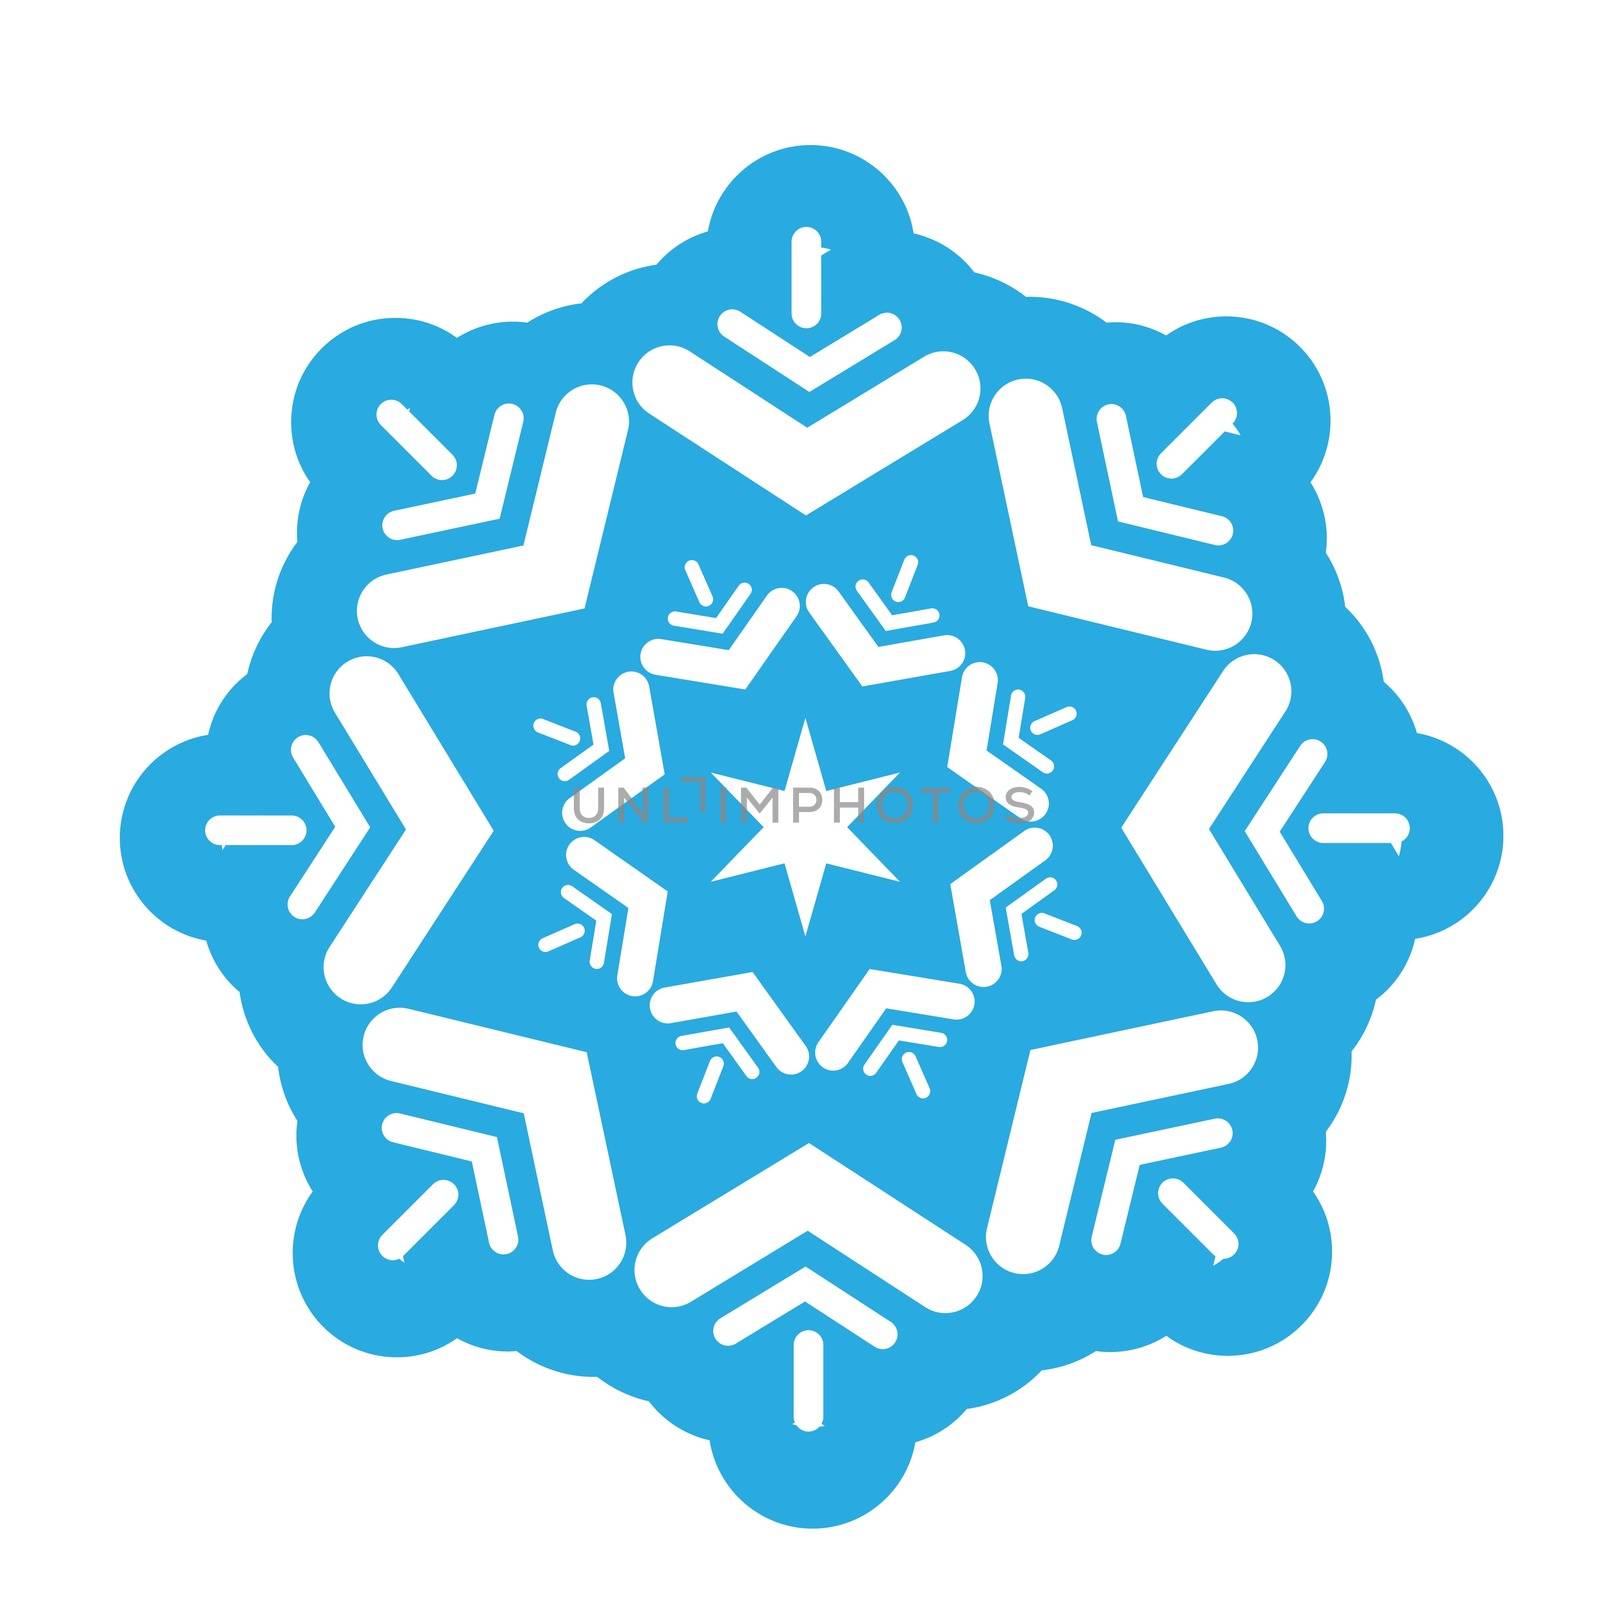 Delicate digital blue snowflake design by Wavebreakmedia